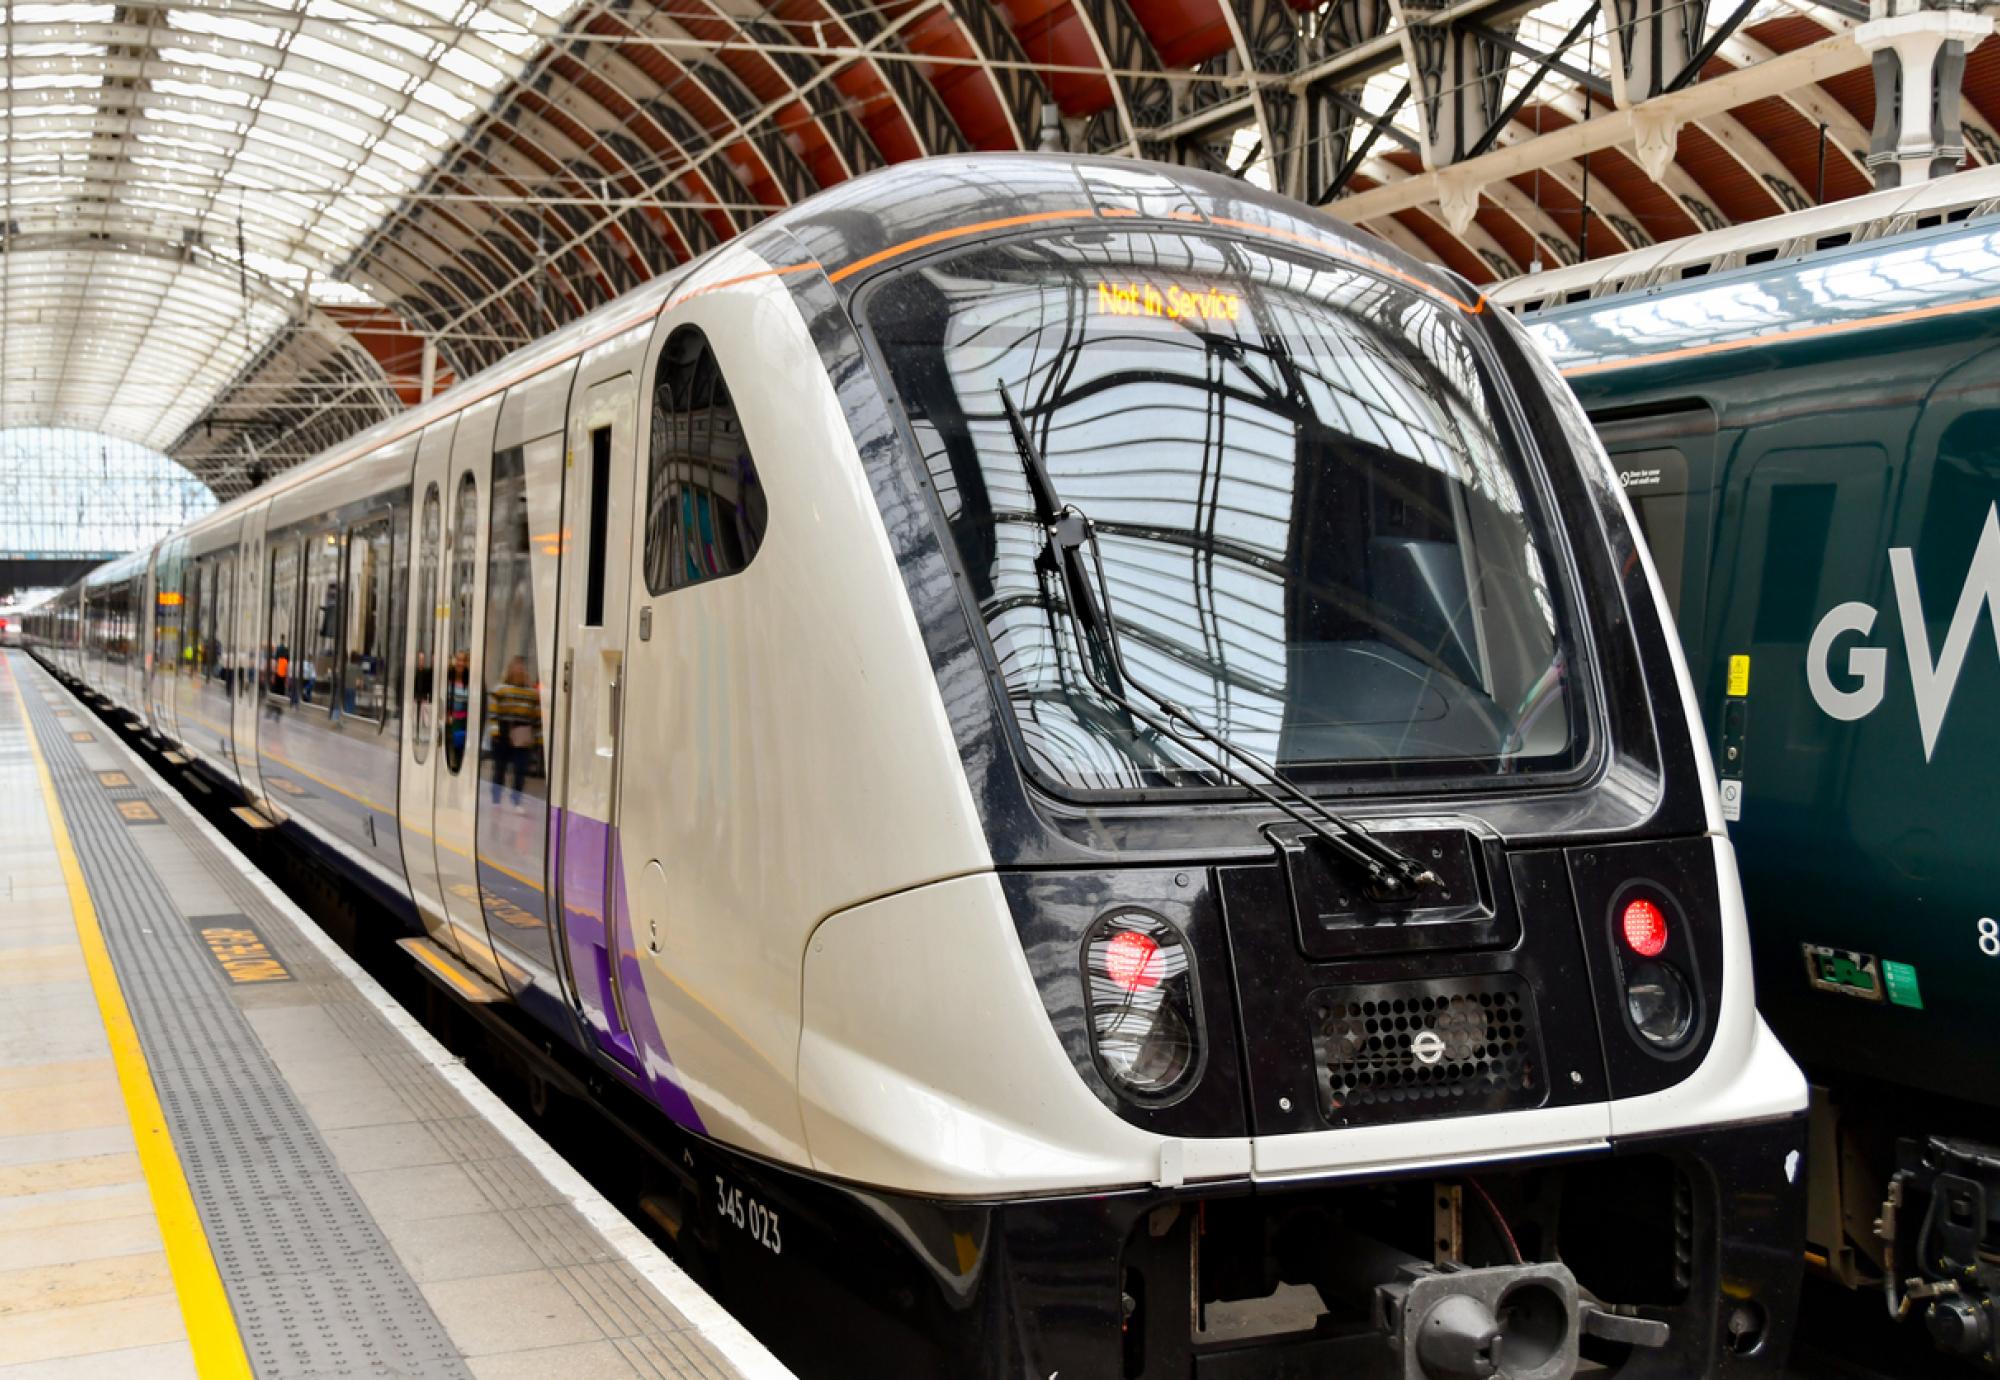 New commuter train on the Elizabeth Line stopped at London Paddington railway station